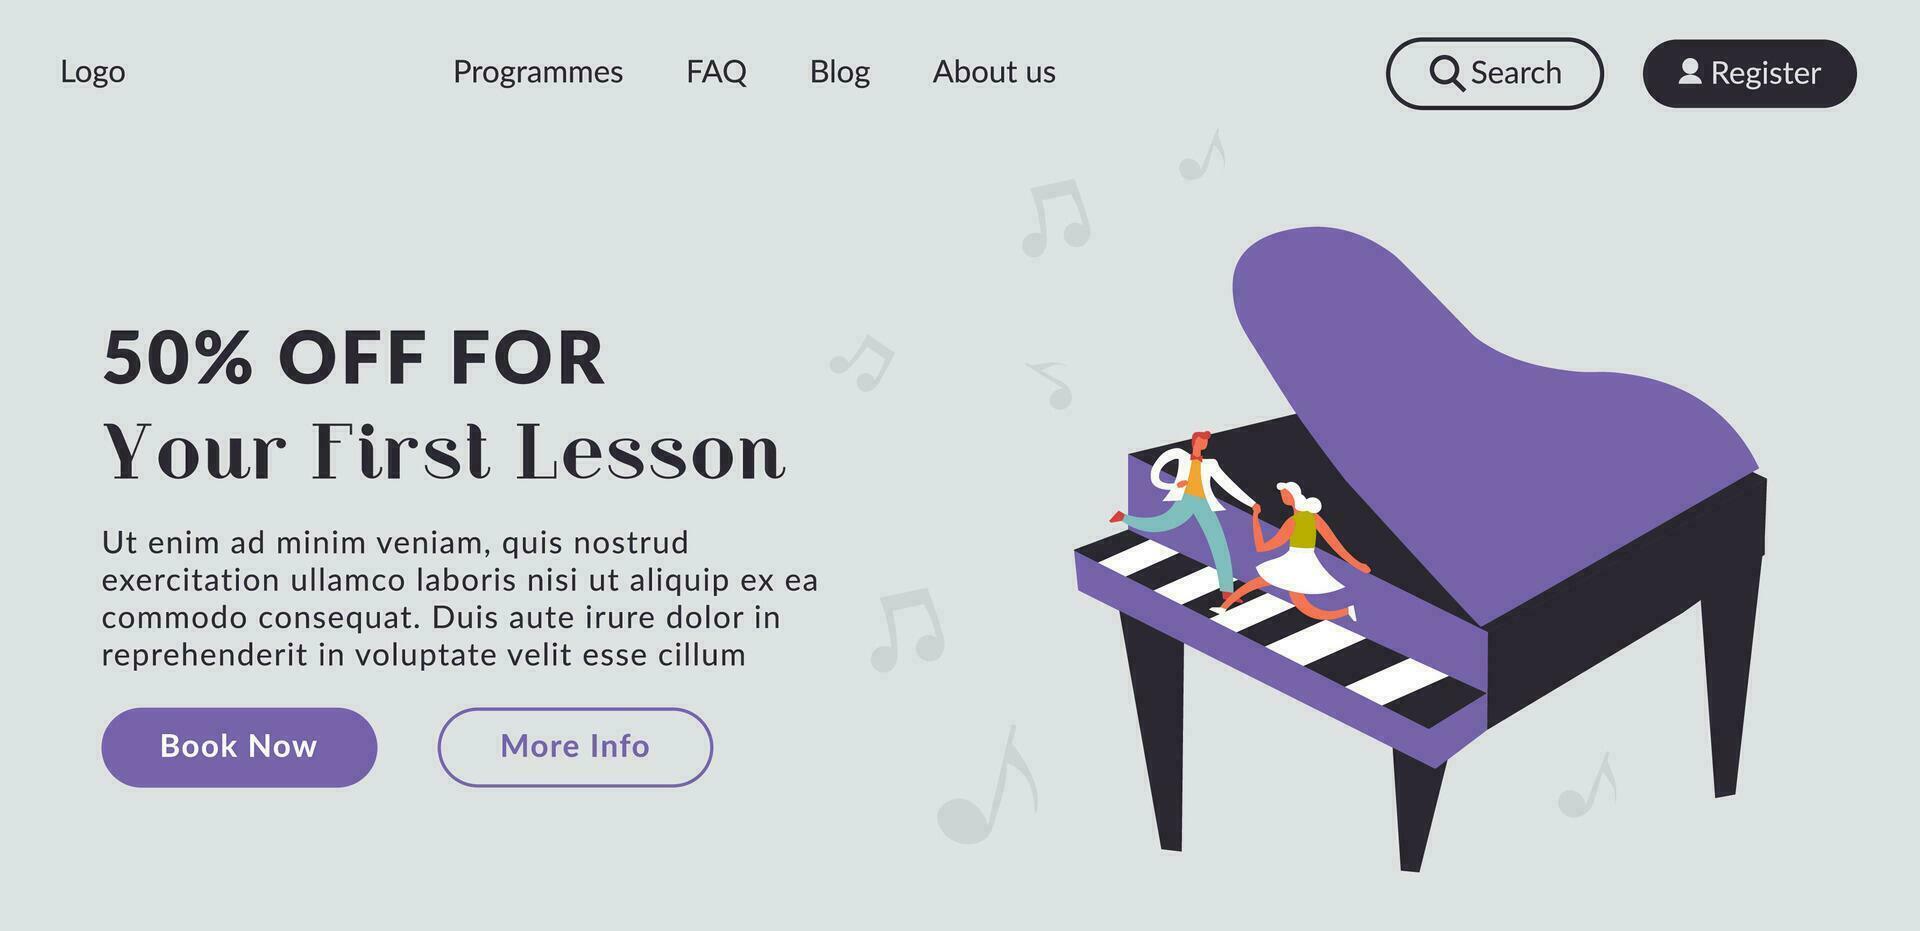 medio apagado descuento para primero piano lección sitio web vector